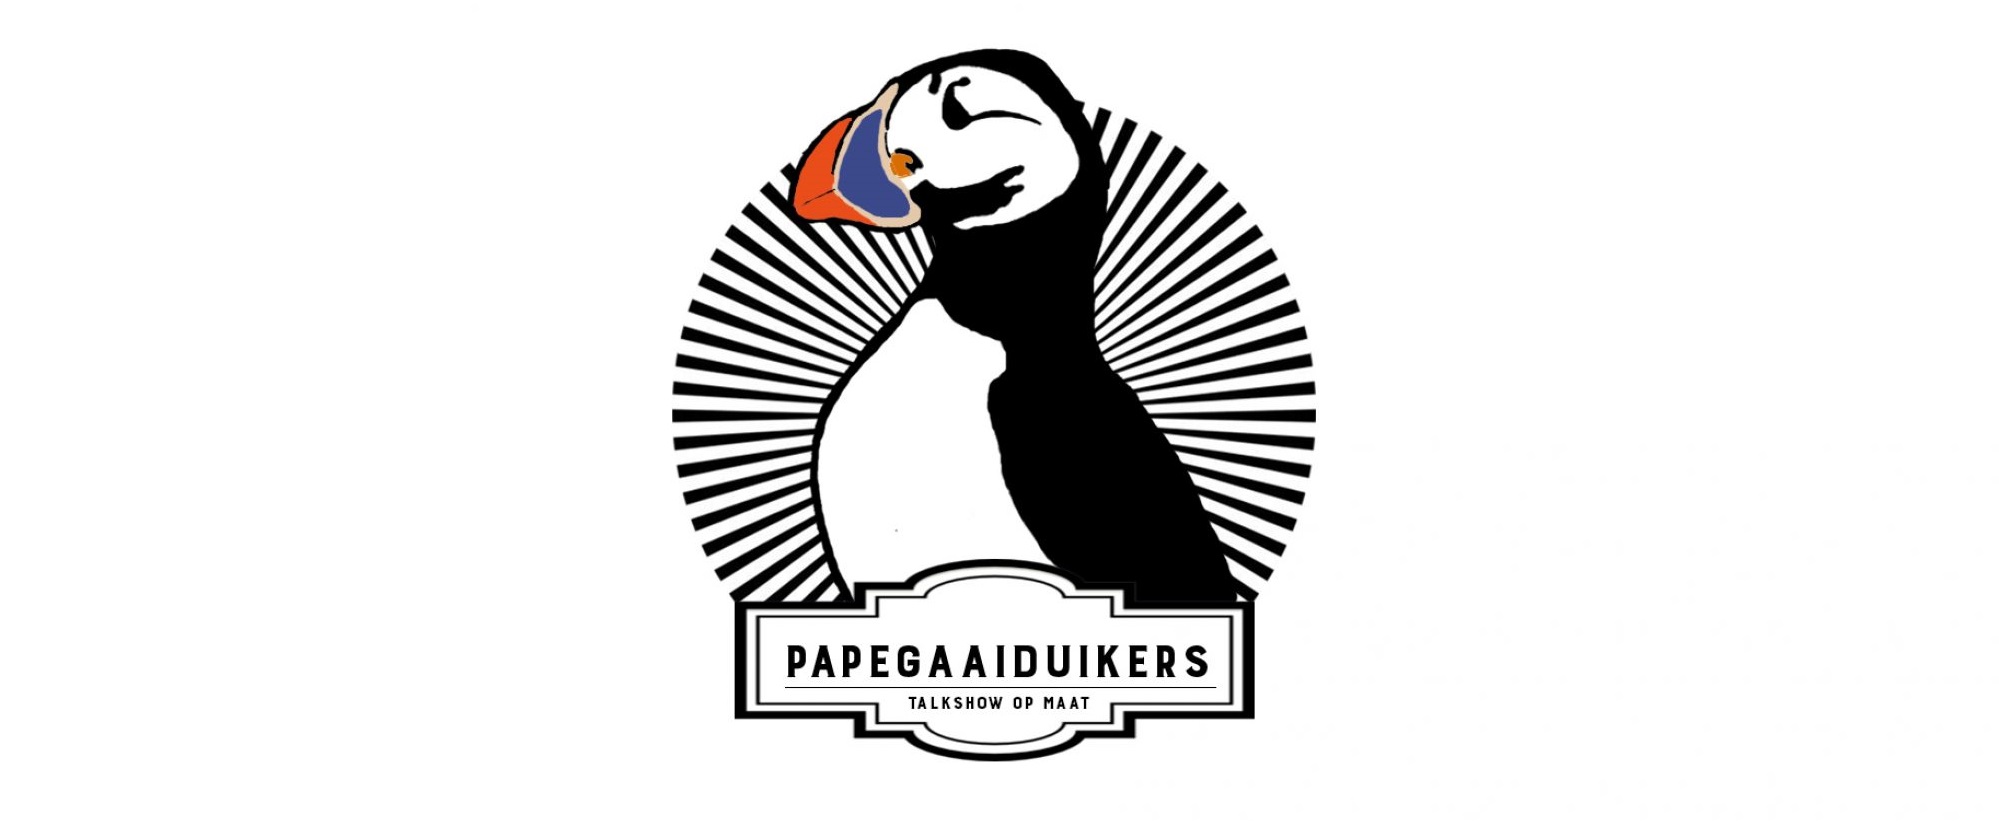 Papegaaiduikers talkshow logo